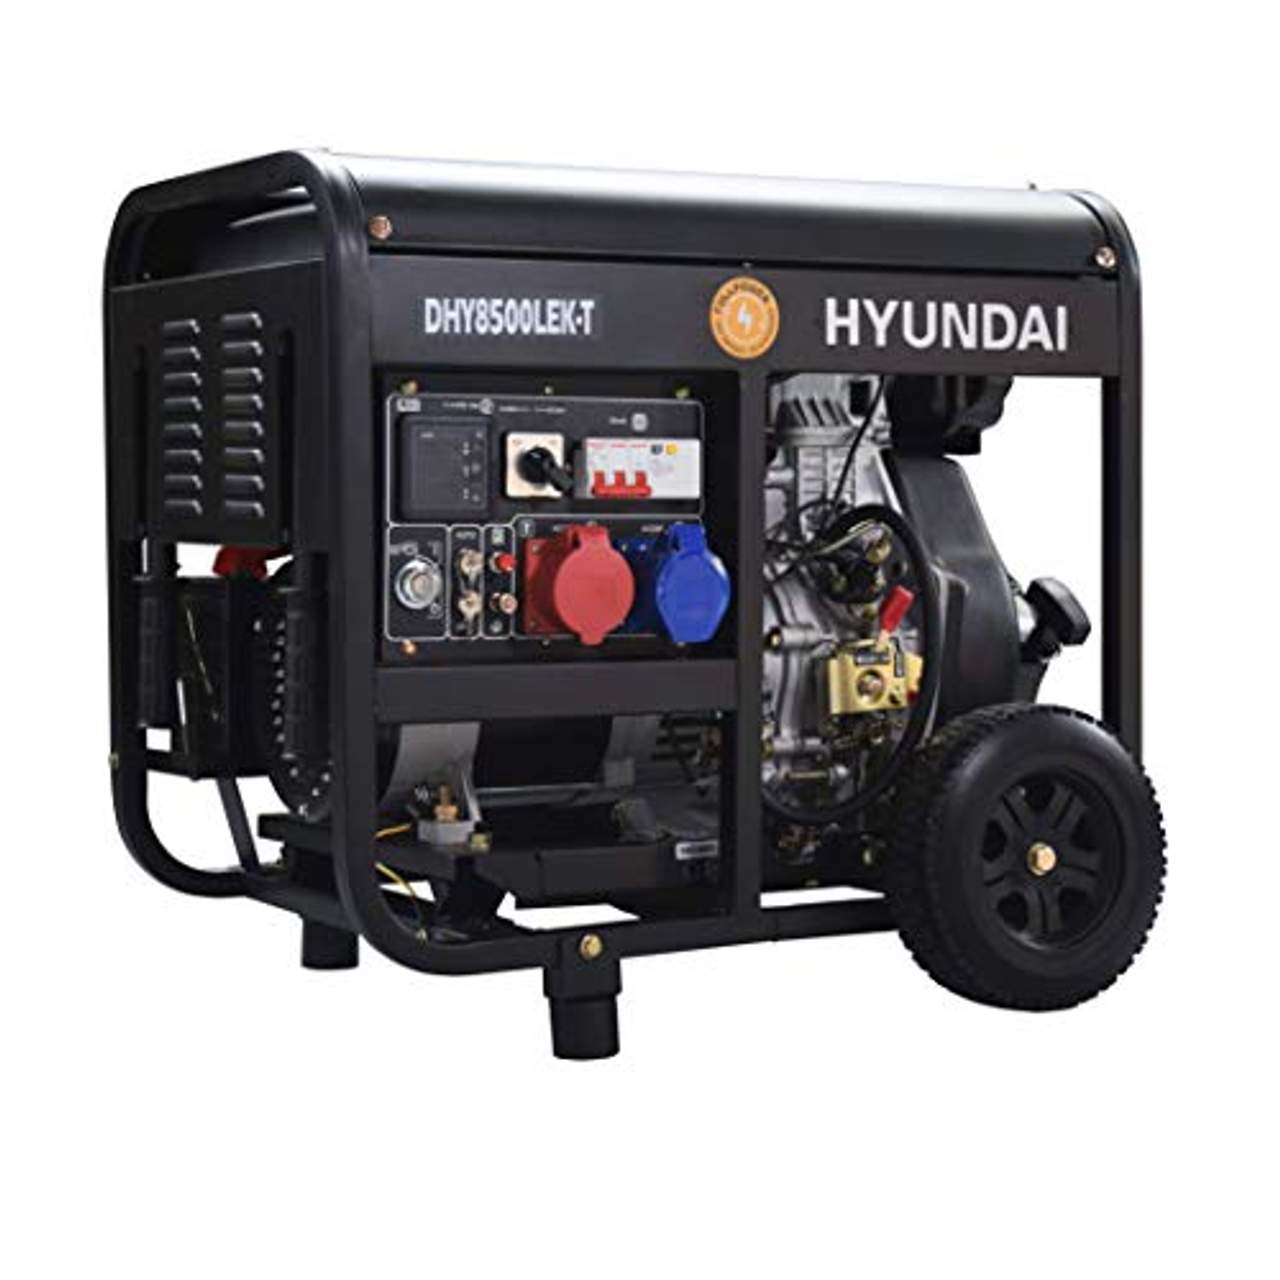 Hyundai DHY8500LEK-T Diesel Generator 3000rpm FullPower